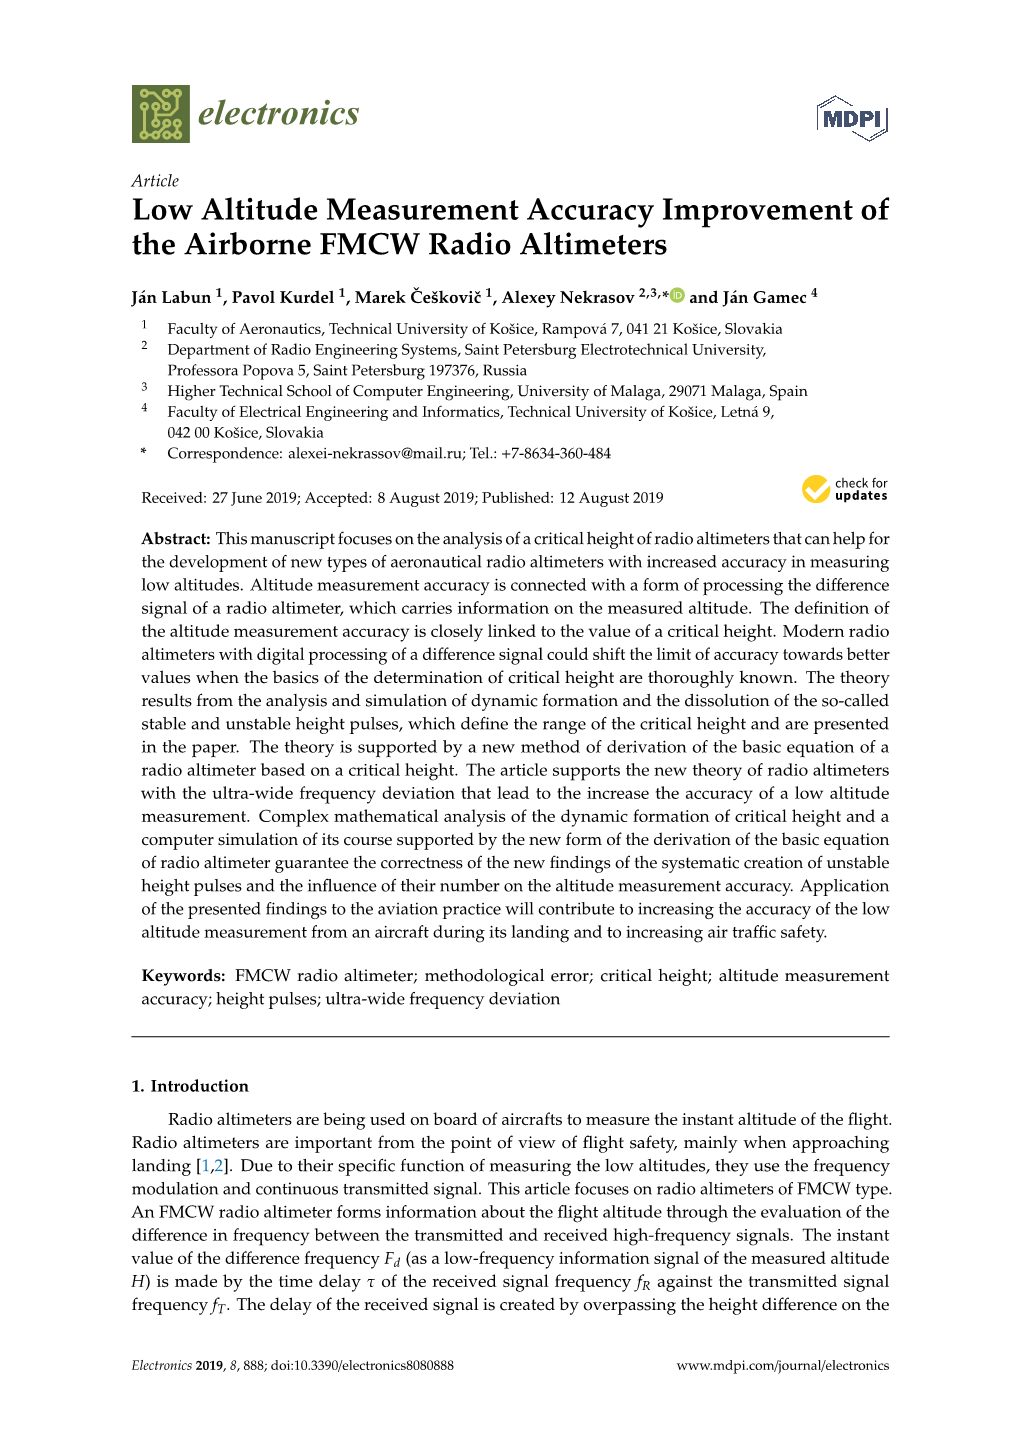 Low Altitude Measurement Accuracy Improvement of the Airborne FMCW Radio Altimeters